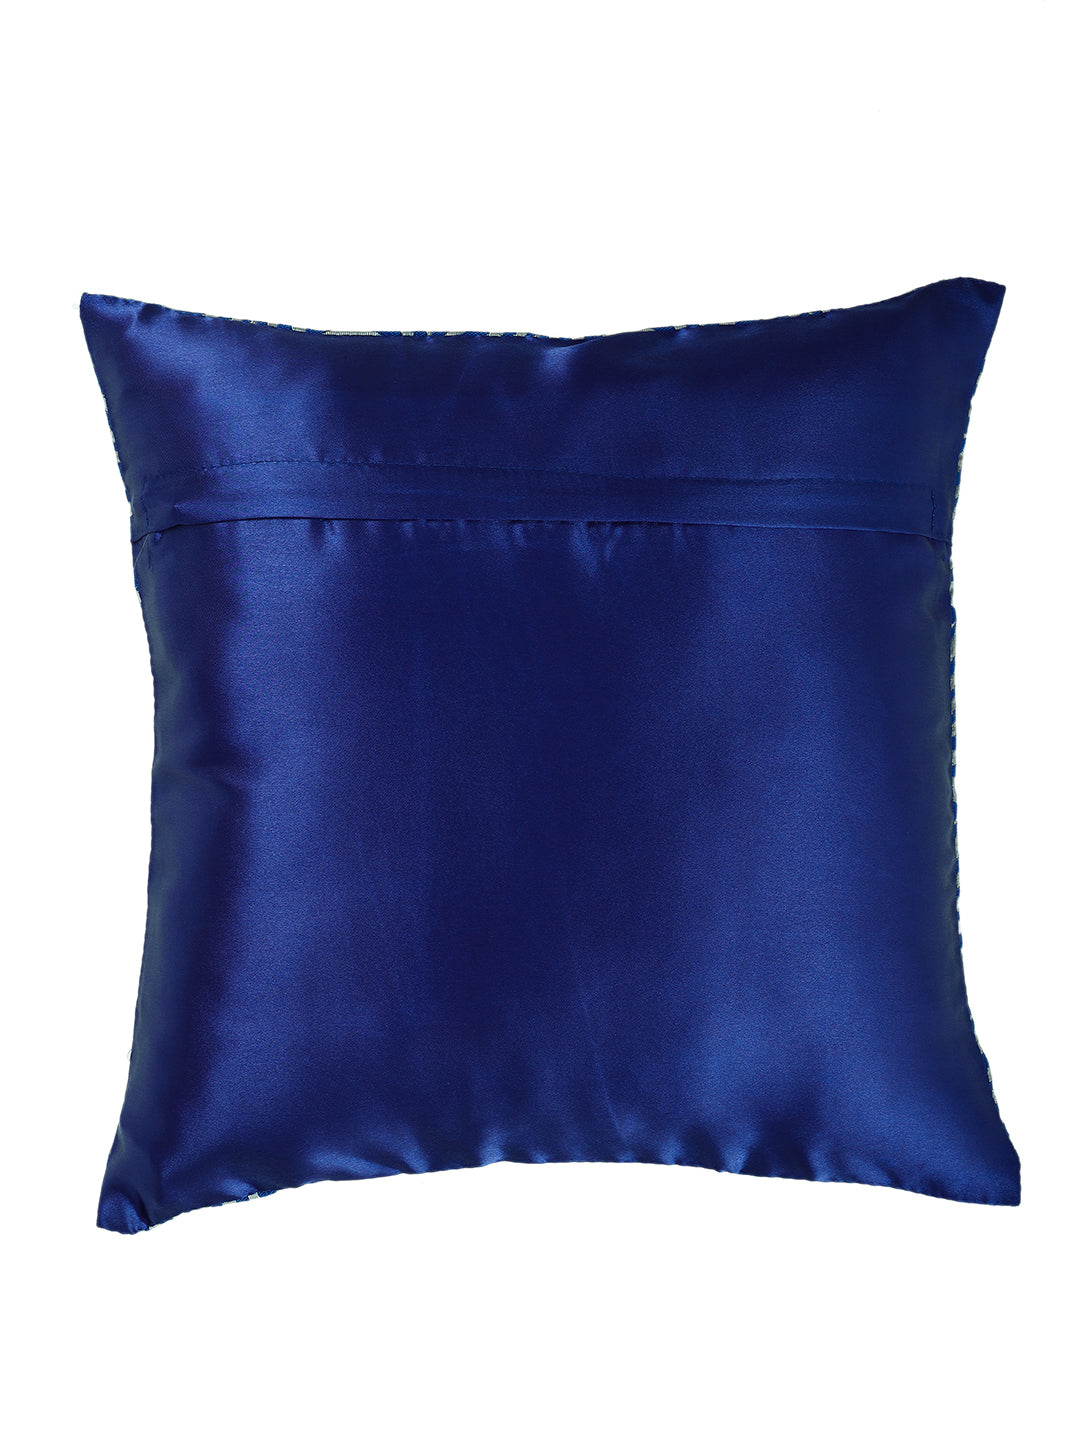 Silkfab Set 0f 5 Decorative Silk Cushion Covers (16x16) Flame Blue - SILKFAB